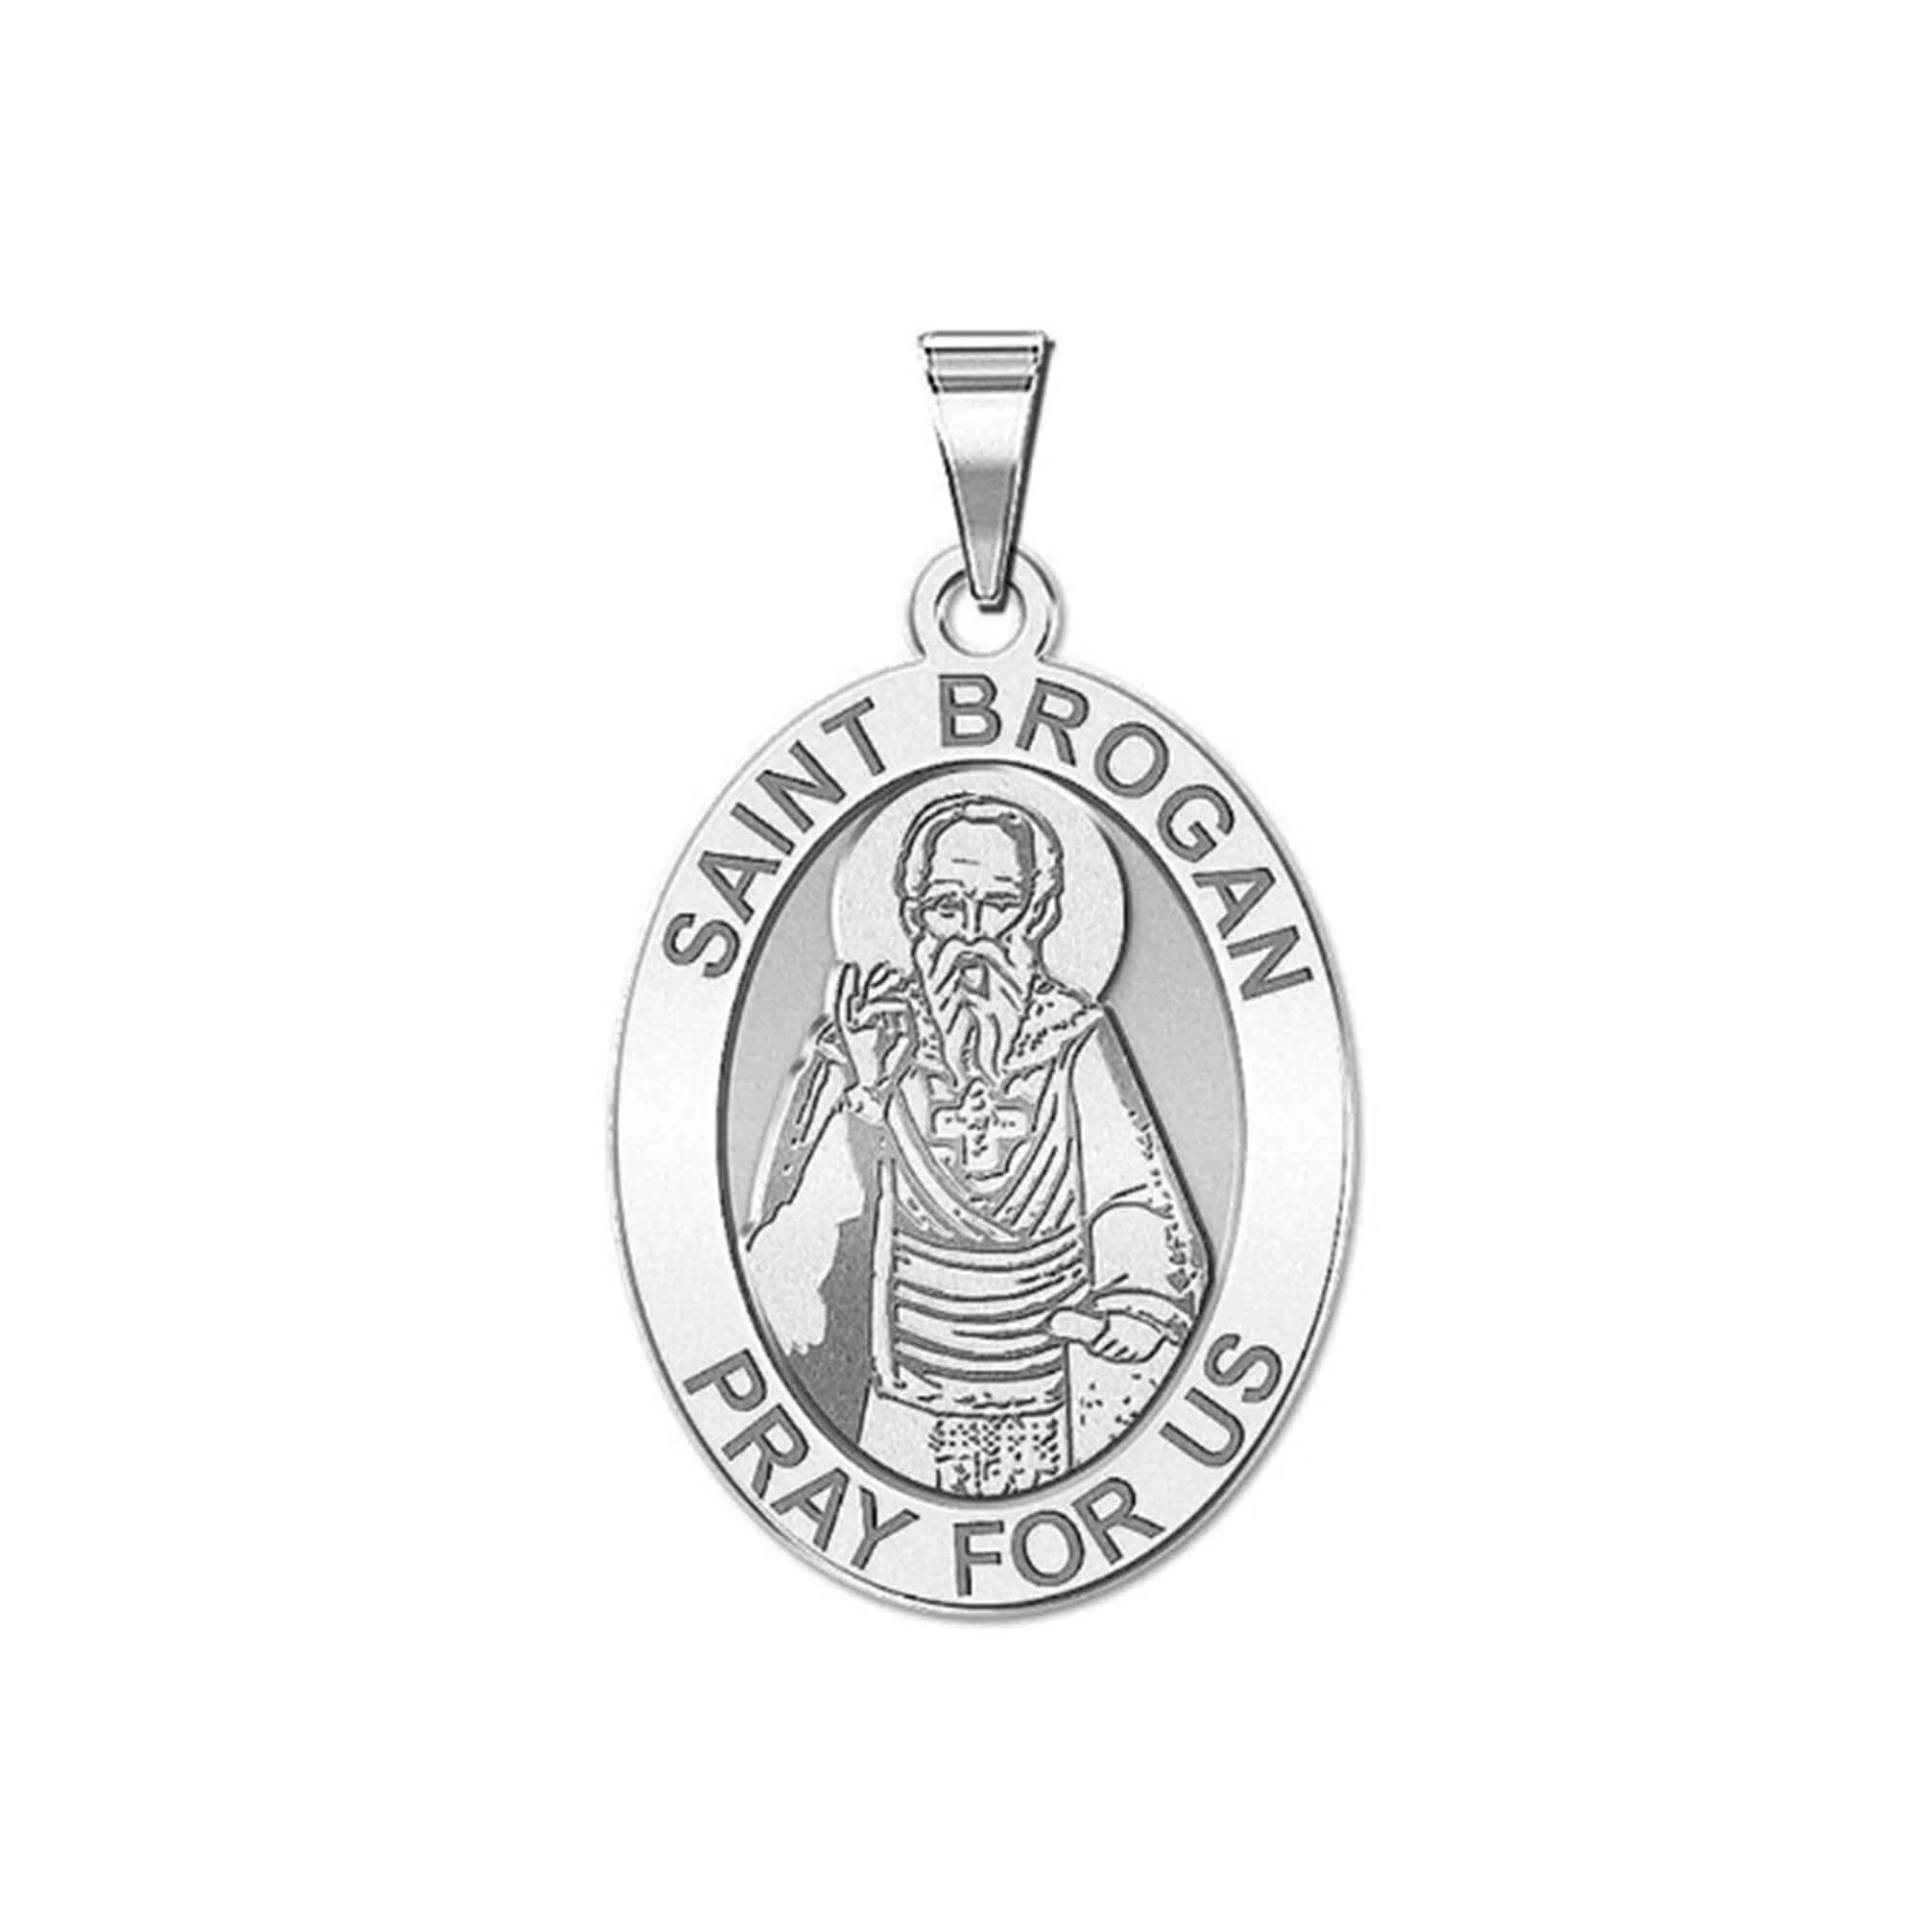 Saint Brogan Oval Religiöse Medaille von CustomizeTheCharms